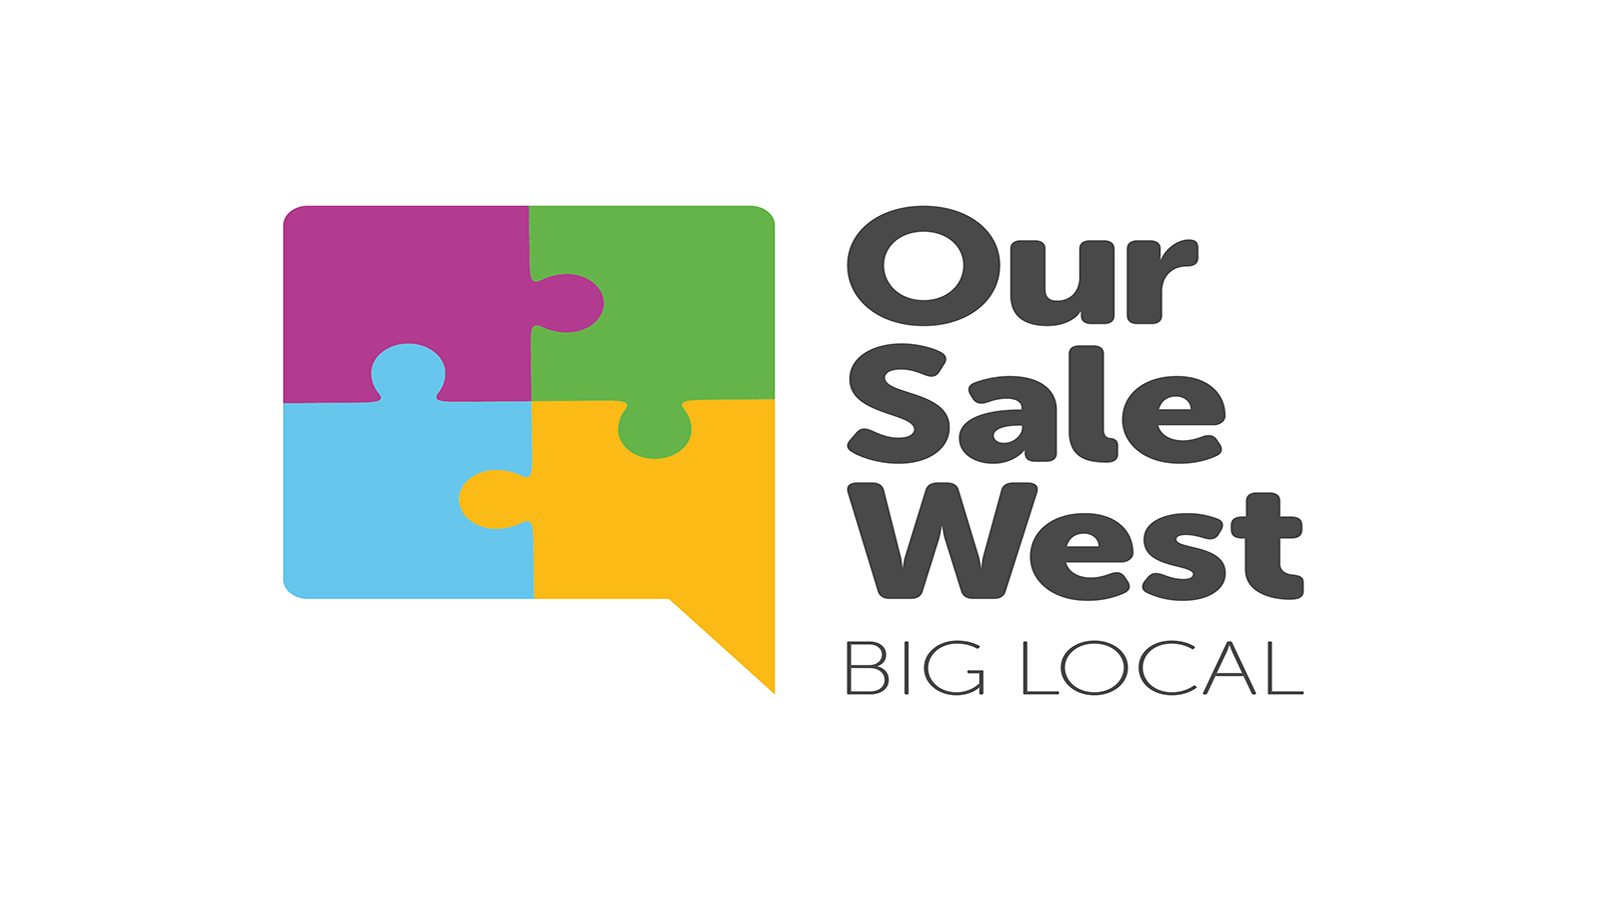 Our Sale West Big Local logo